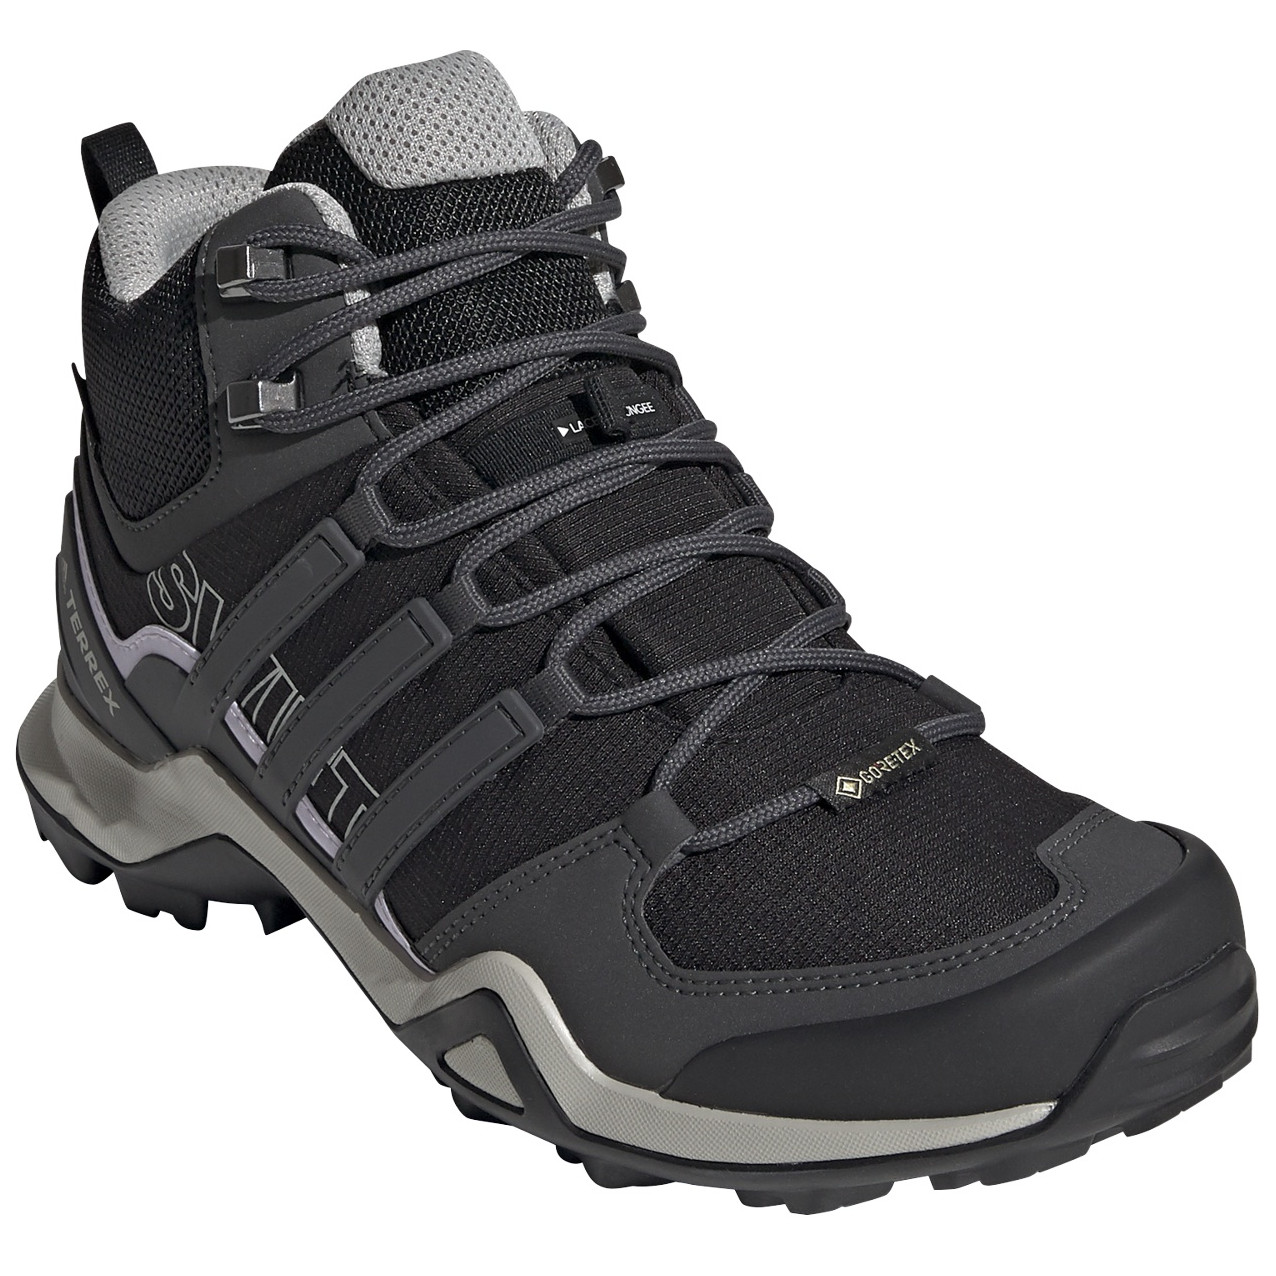 Dámské boty Adidas Terrex Swift R2 MID GTX W Velikost bot (EU): 41 (1/3) / Barva: černá/šedá